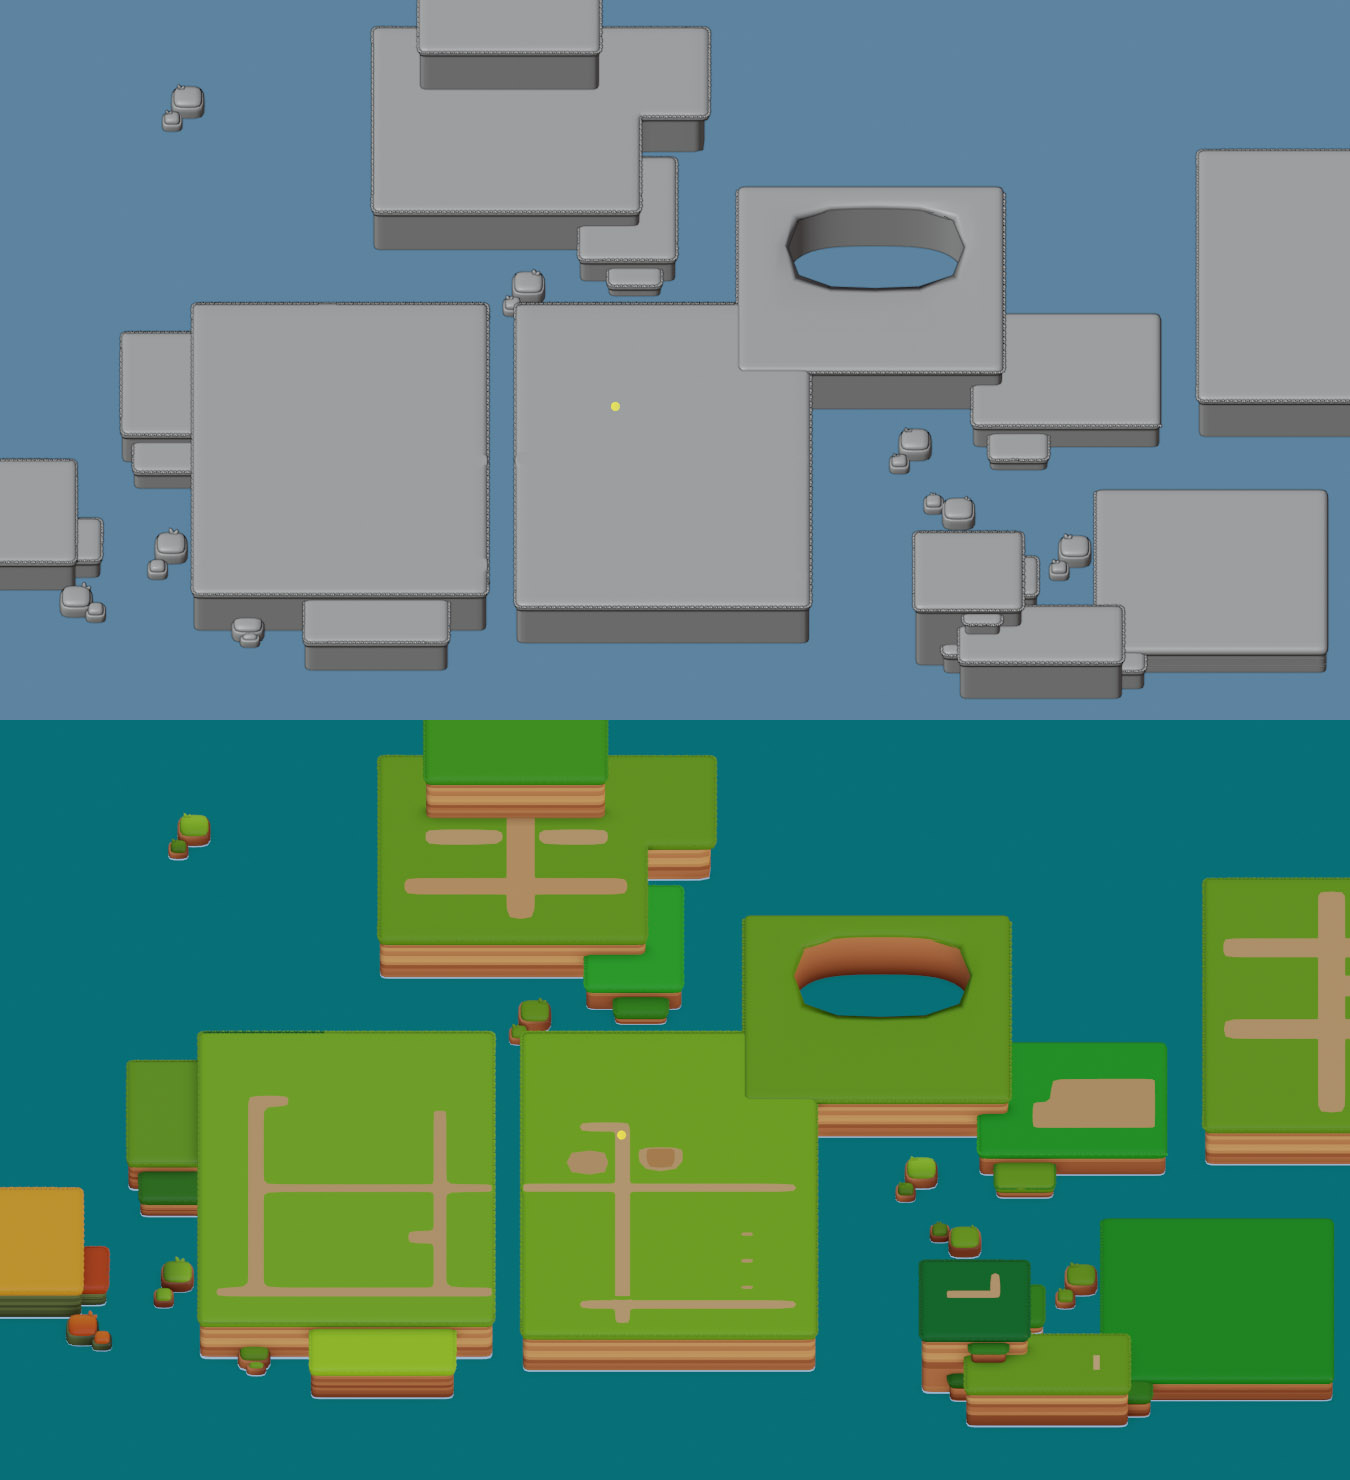 Blender制作游戏像素风格小城镇-概念图制作